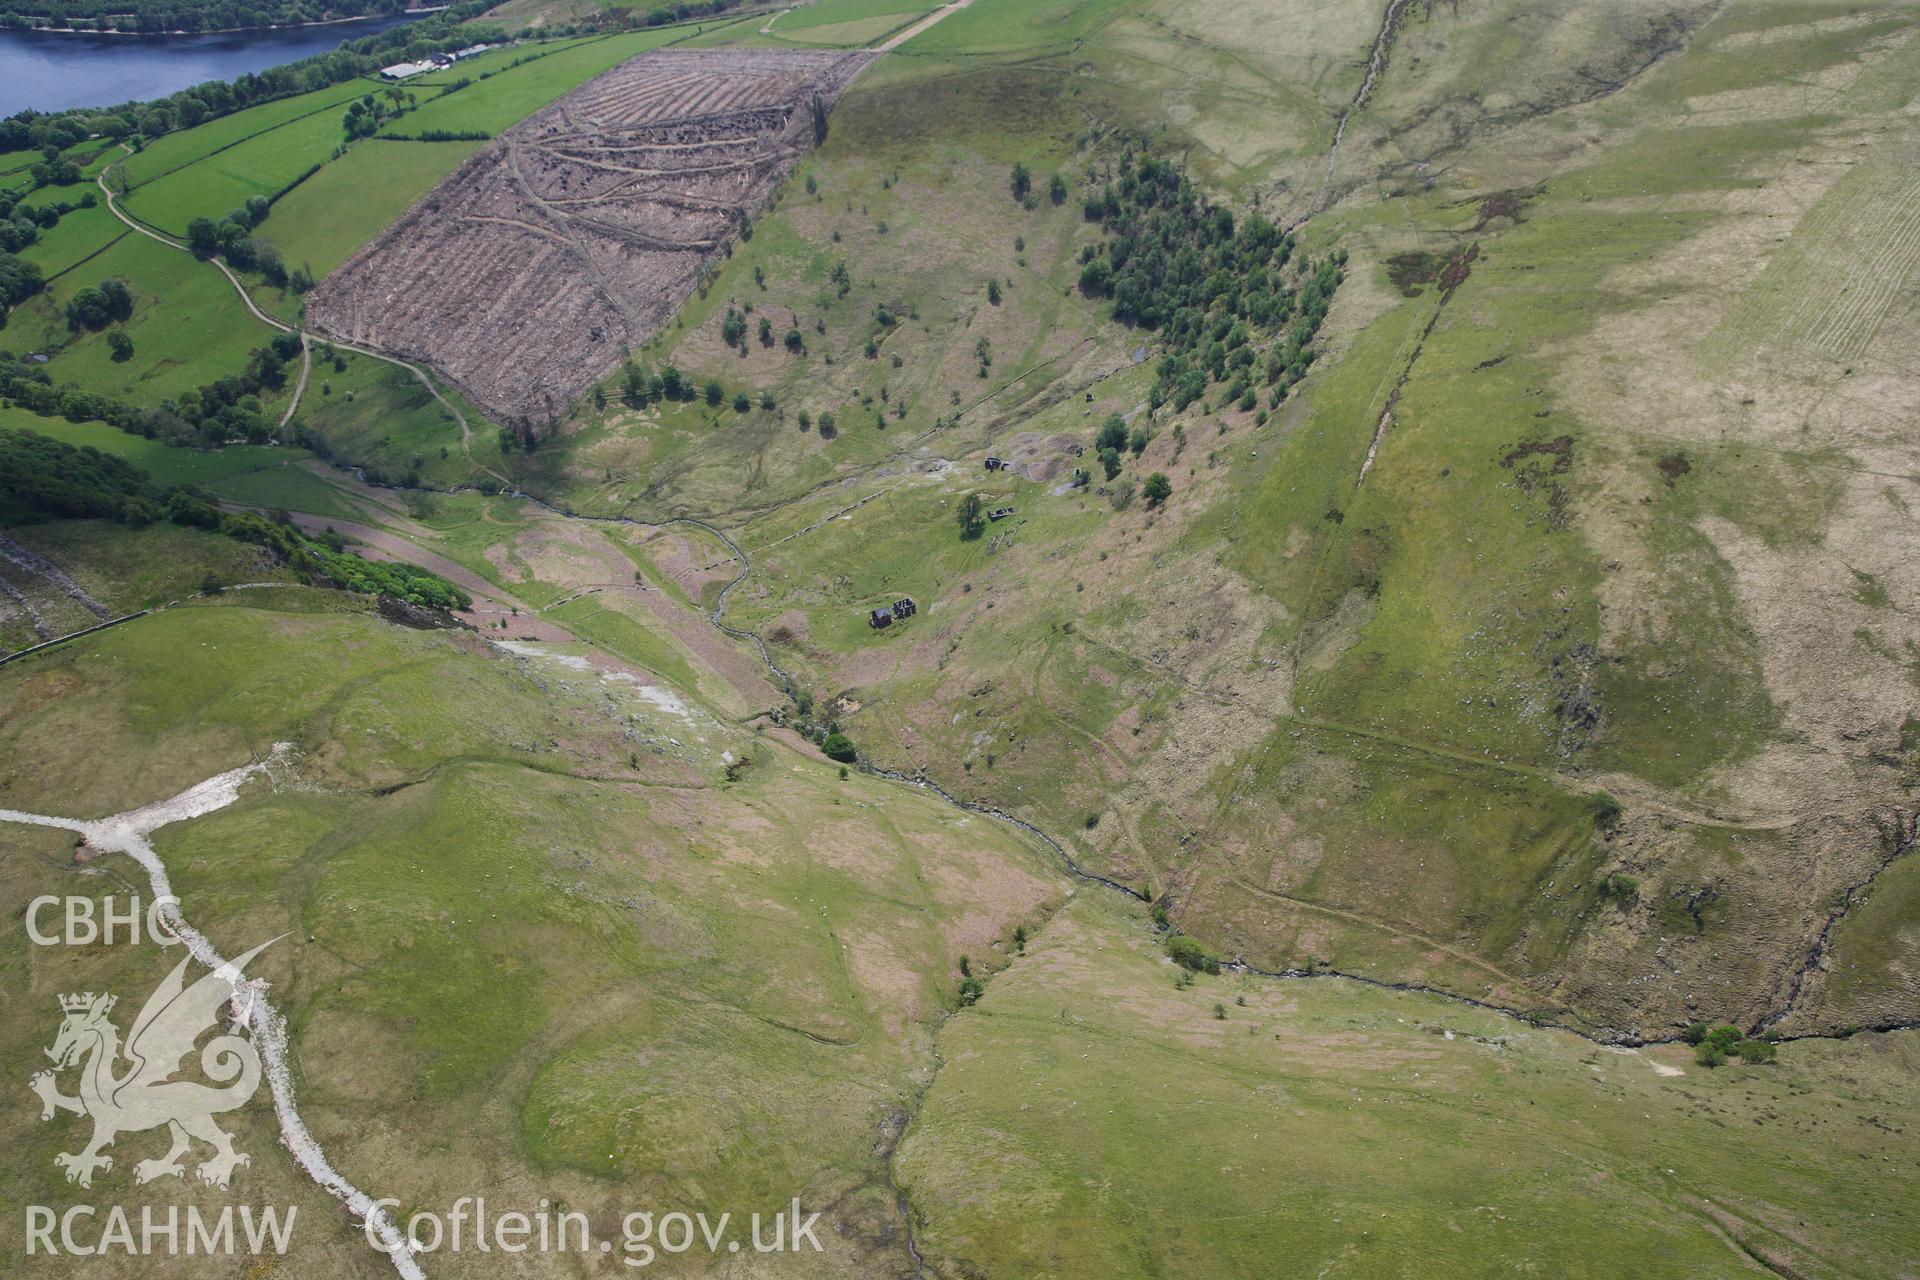 RCAHMW colour oblique photograph of Landscape view of Cwm Elan Lead Mine. Taken by Toby Driver on 28/05/2012.